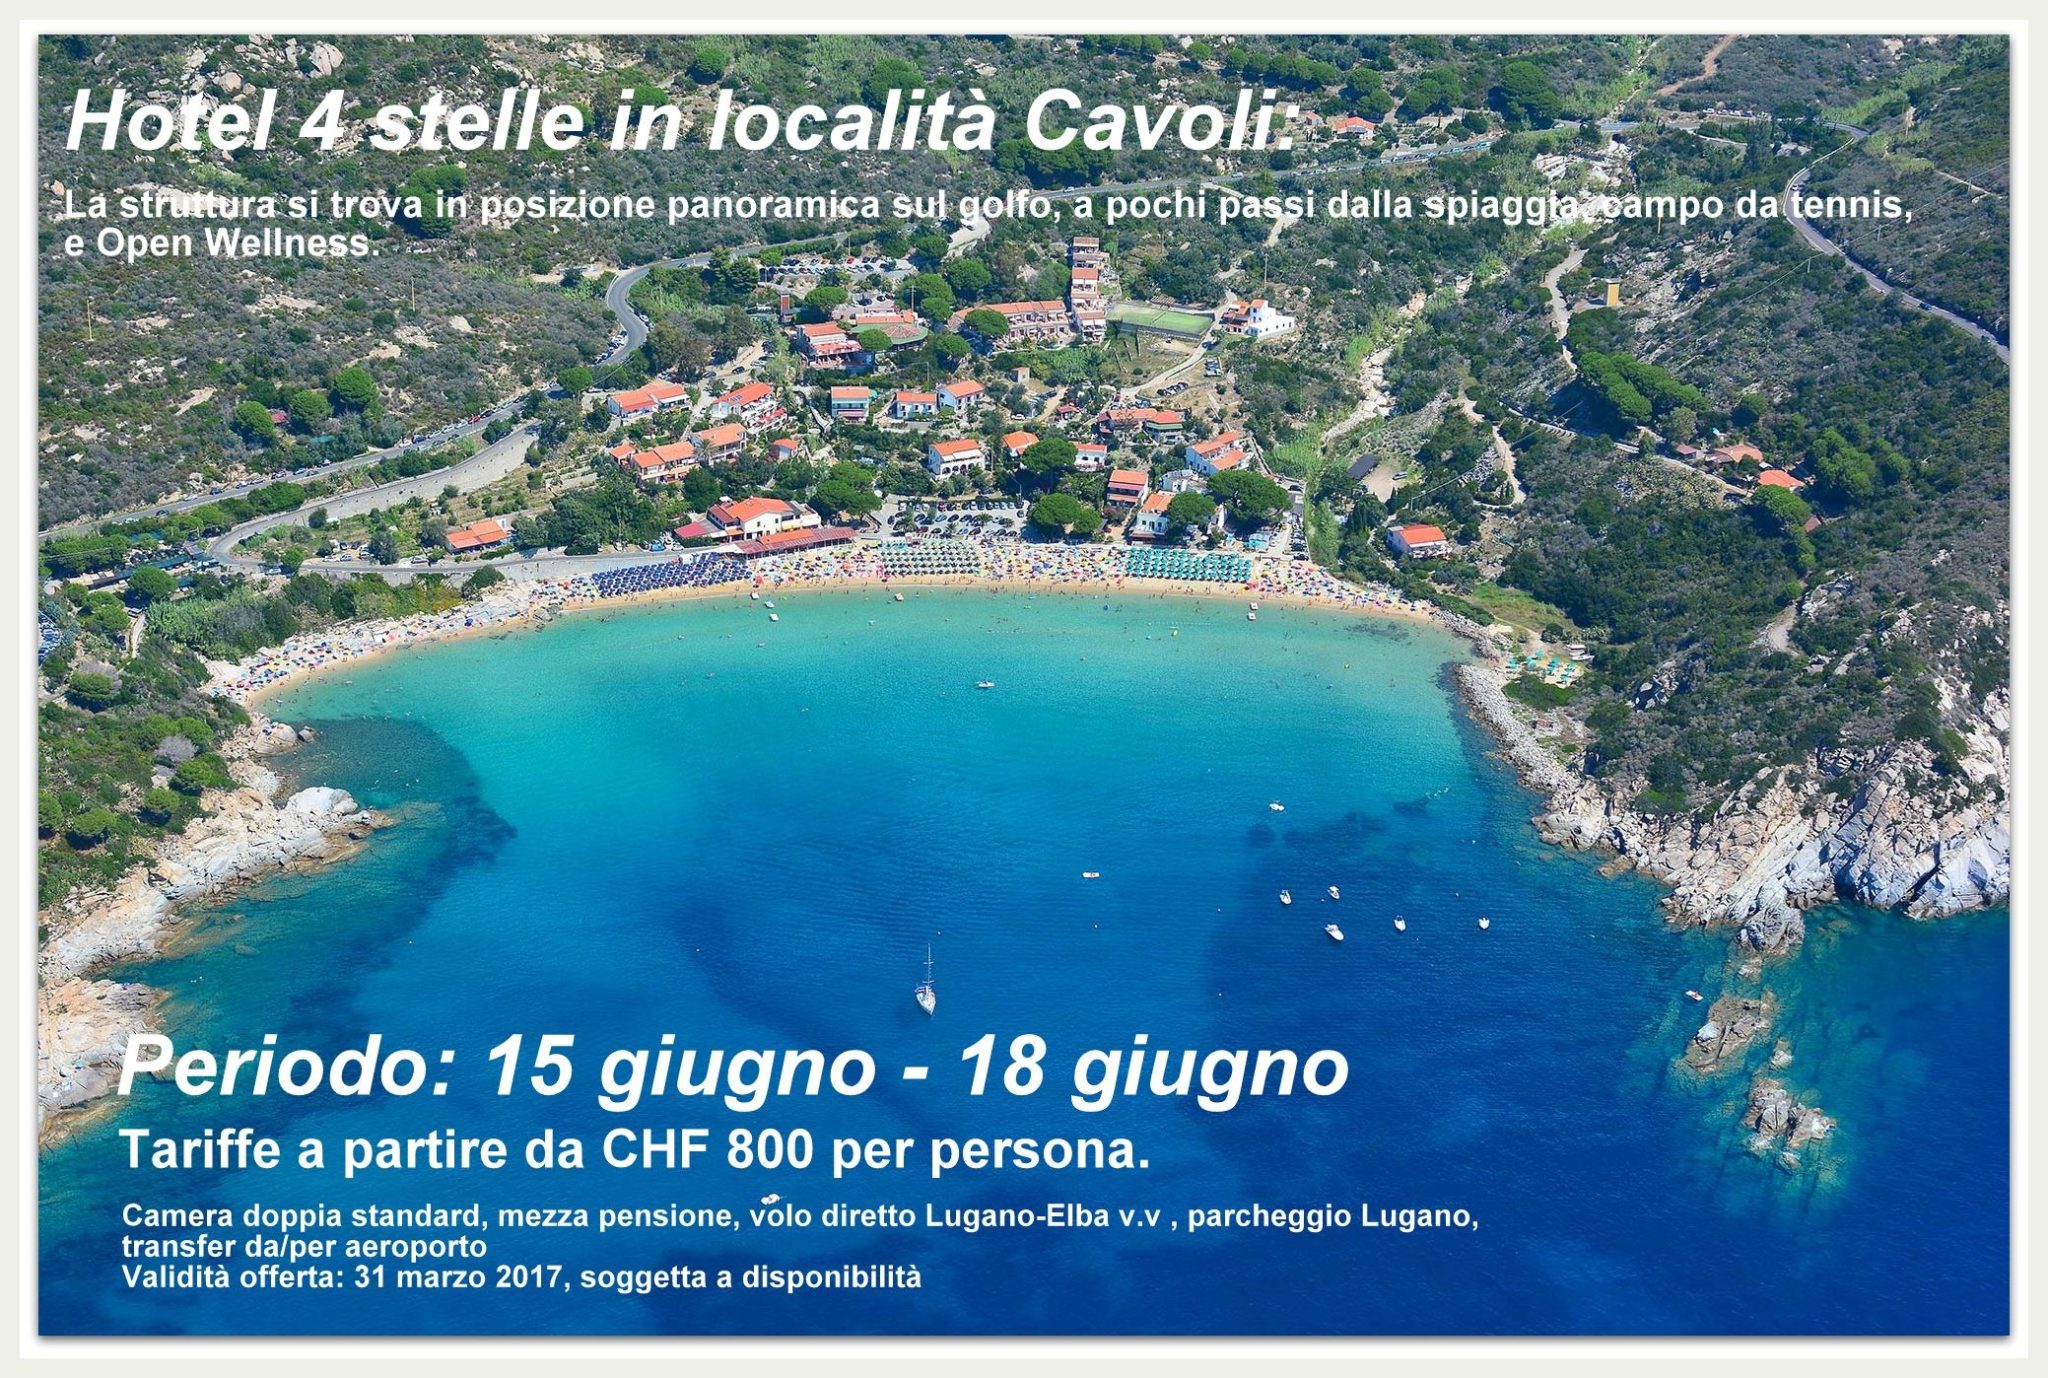 Silver Air offerta: Hotel 4 stelle in località Cavoli